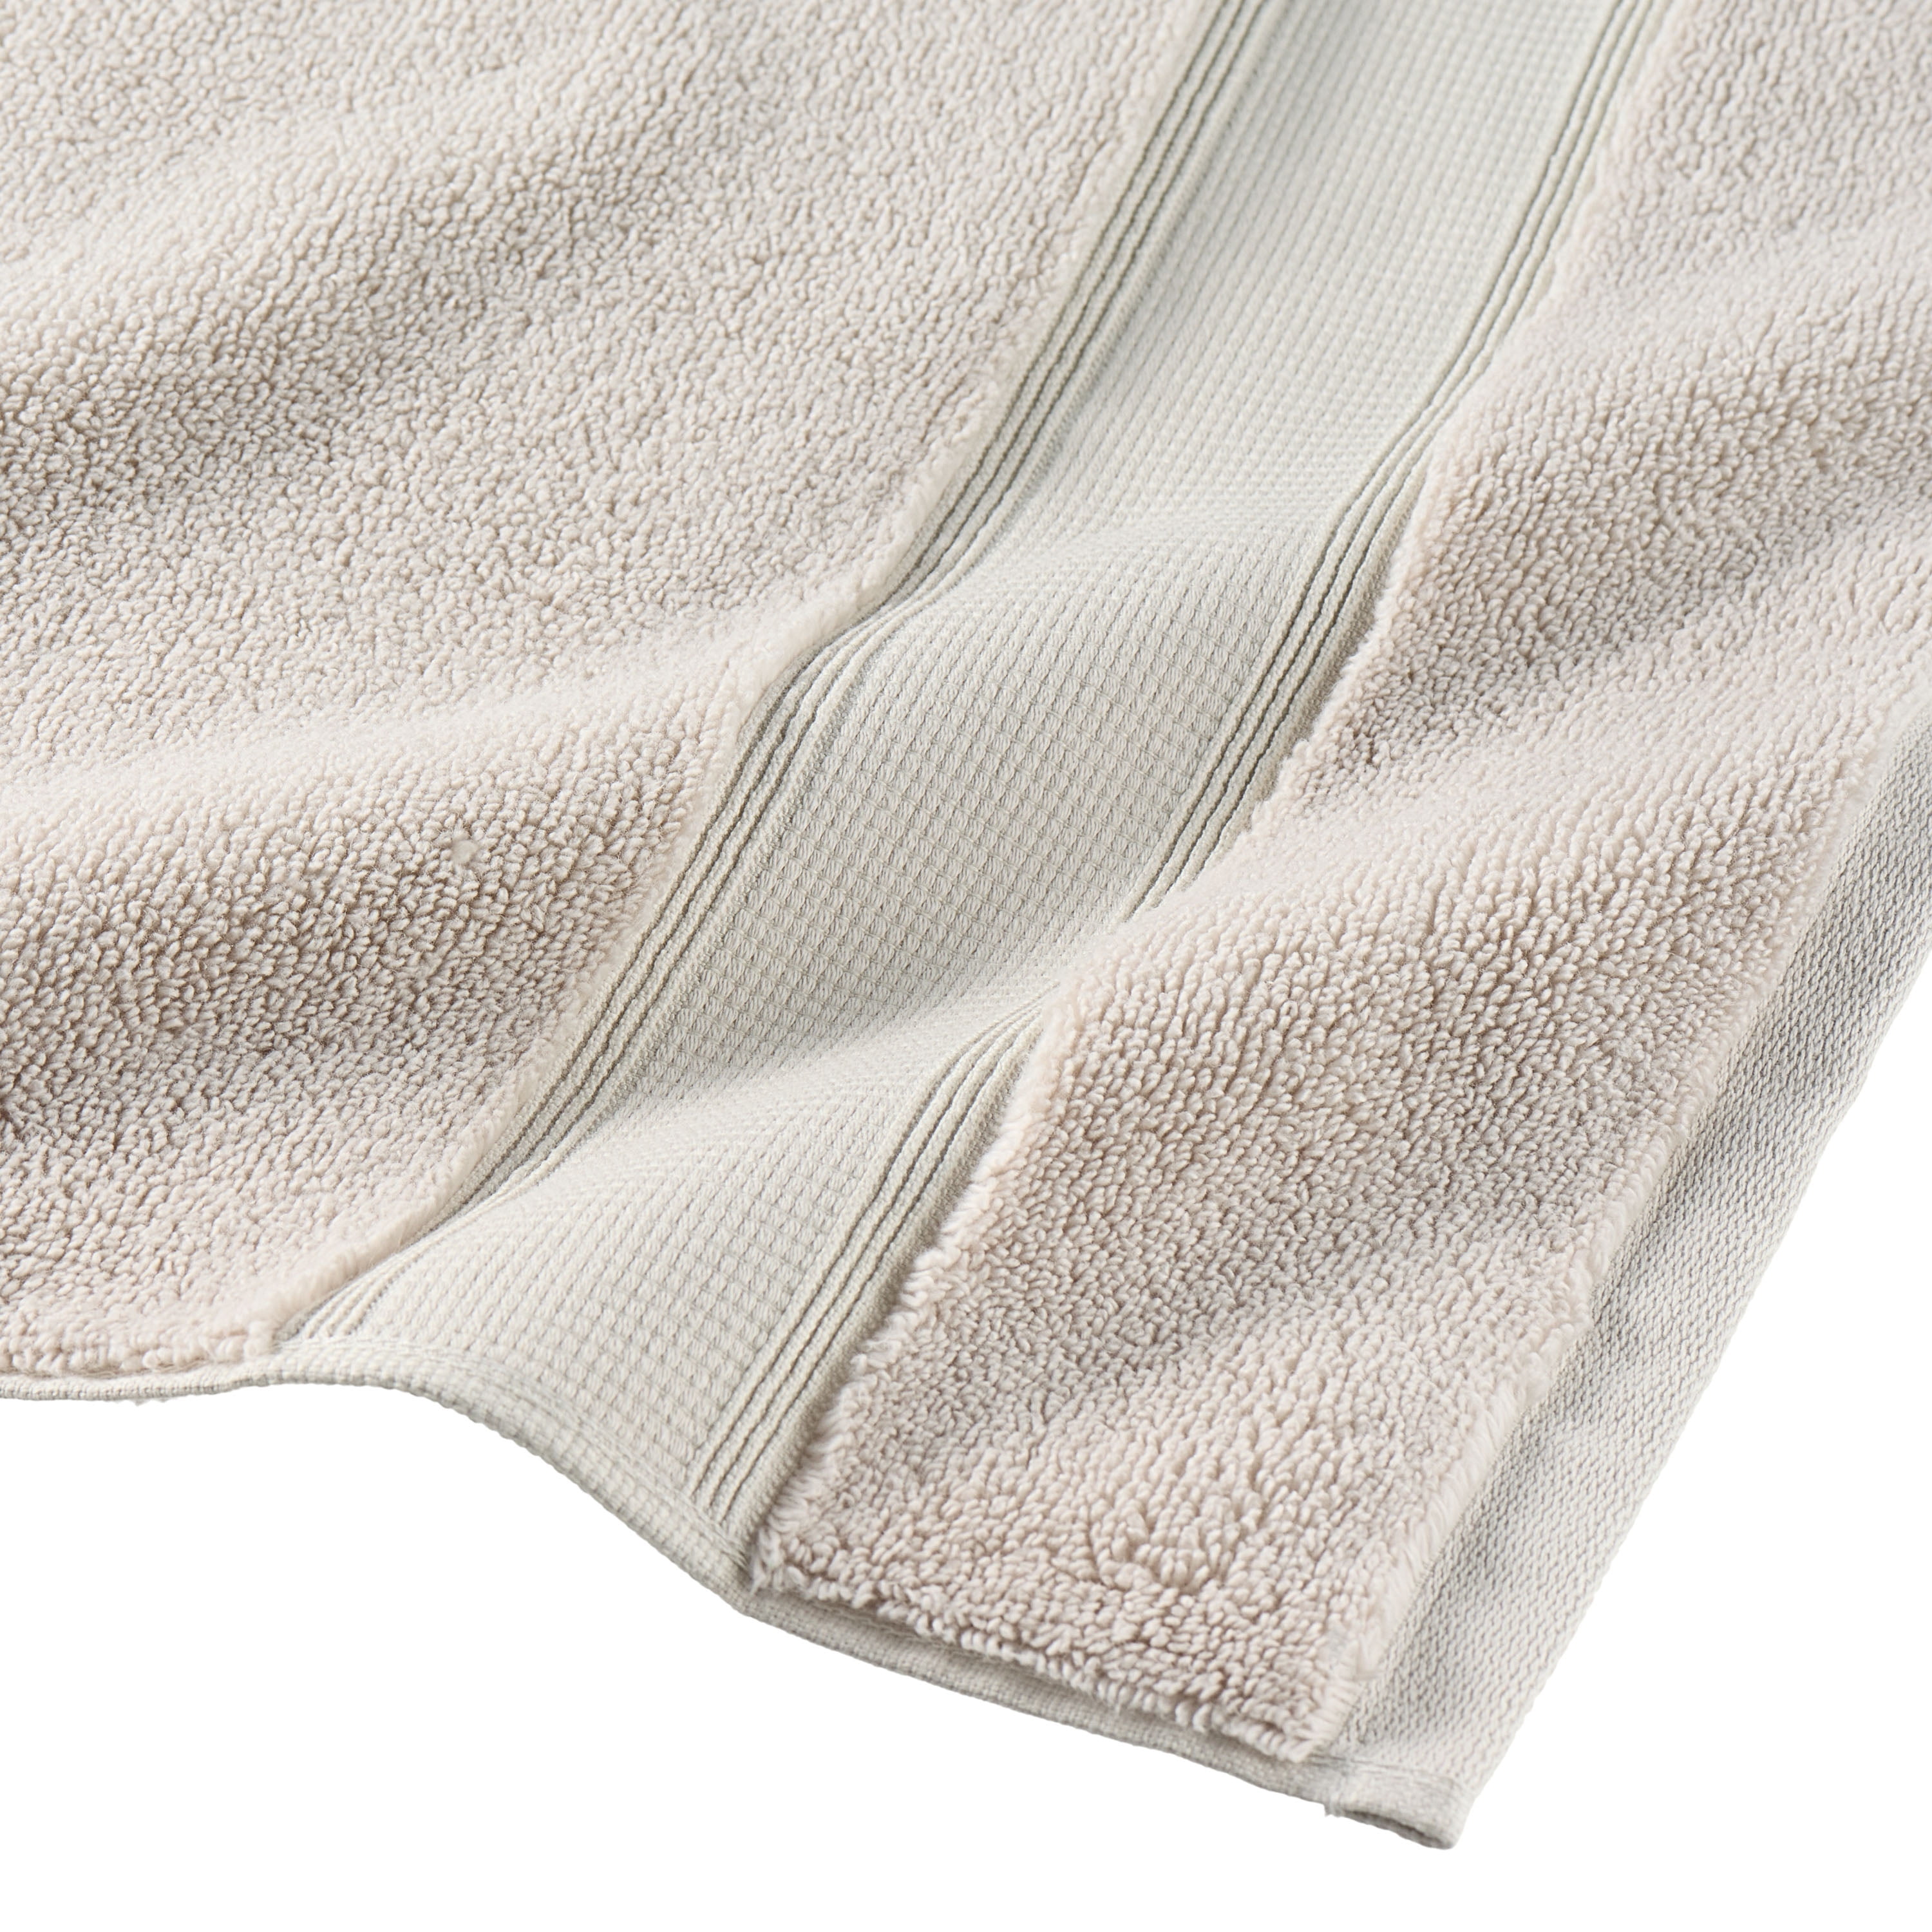 Hotel Style 6-Piece Egyptian Cotton Textured Bath Coordinate Towel Set, Marine Deep, Size: 6 Piece Bath Towel Set